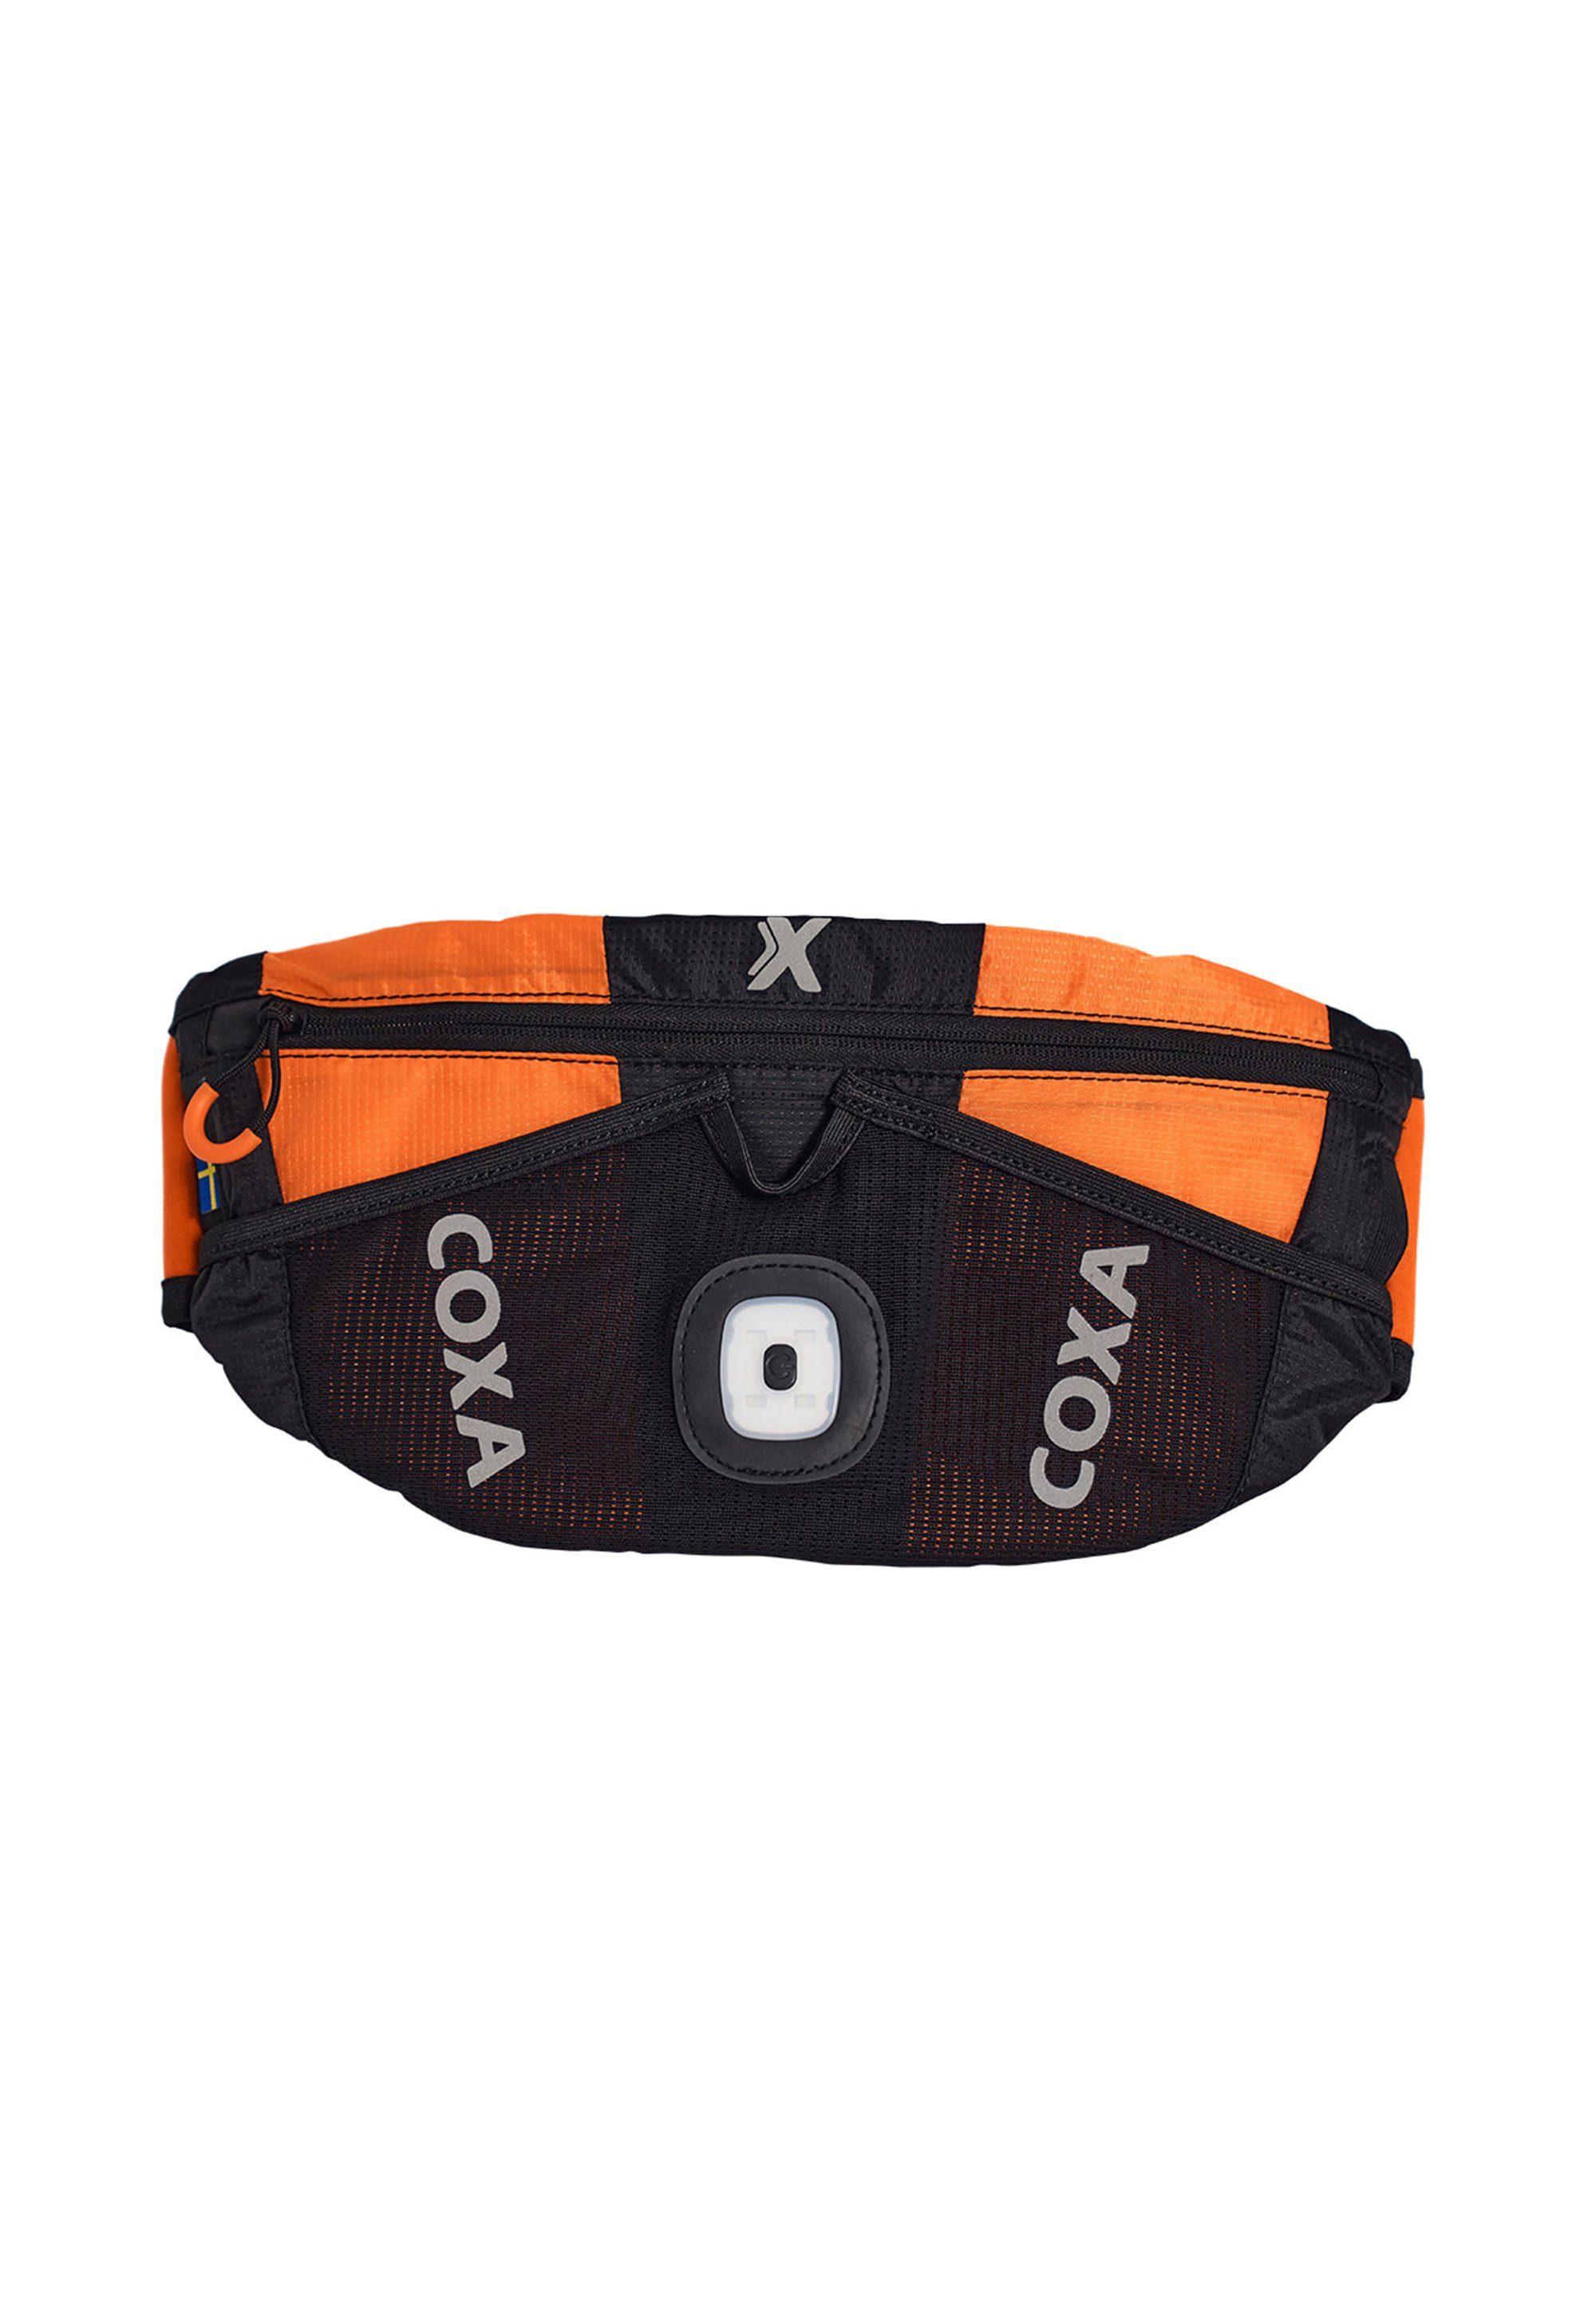 Coxa Carry Gürteltasche WR1 Orange, sports, outdoor